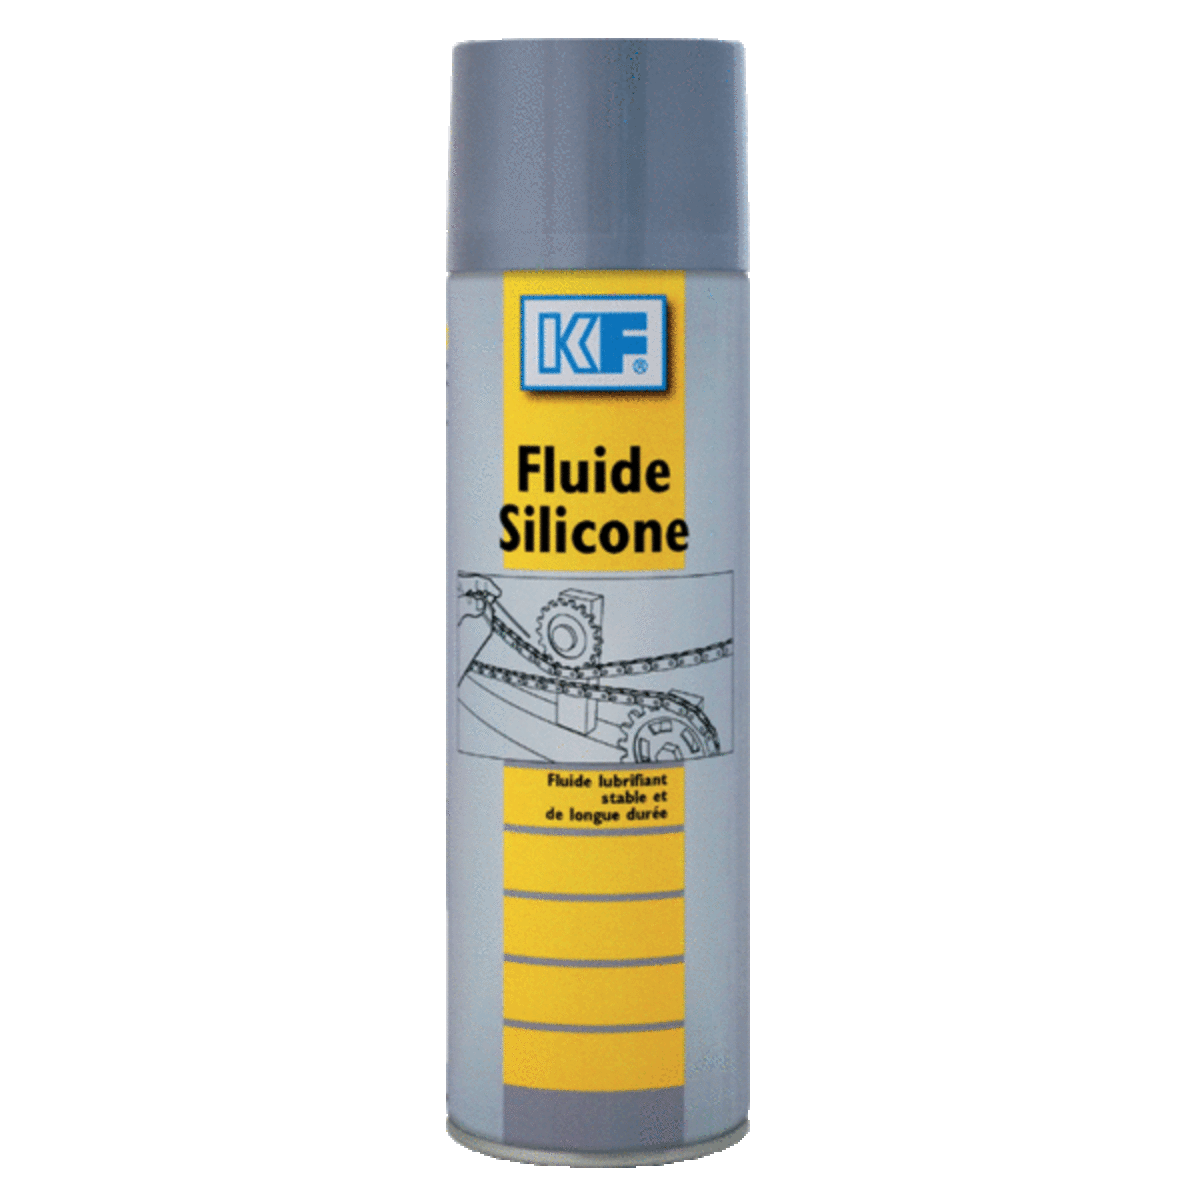 Fluide silicone aérosol 650 ml KF FLUIDE SILICONE